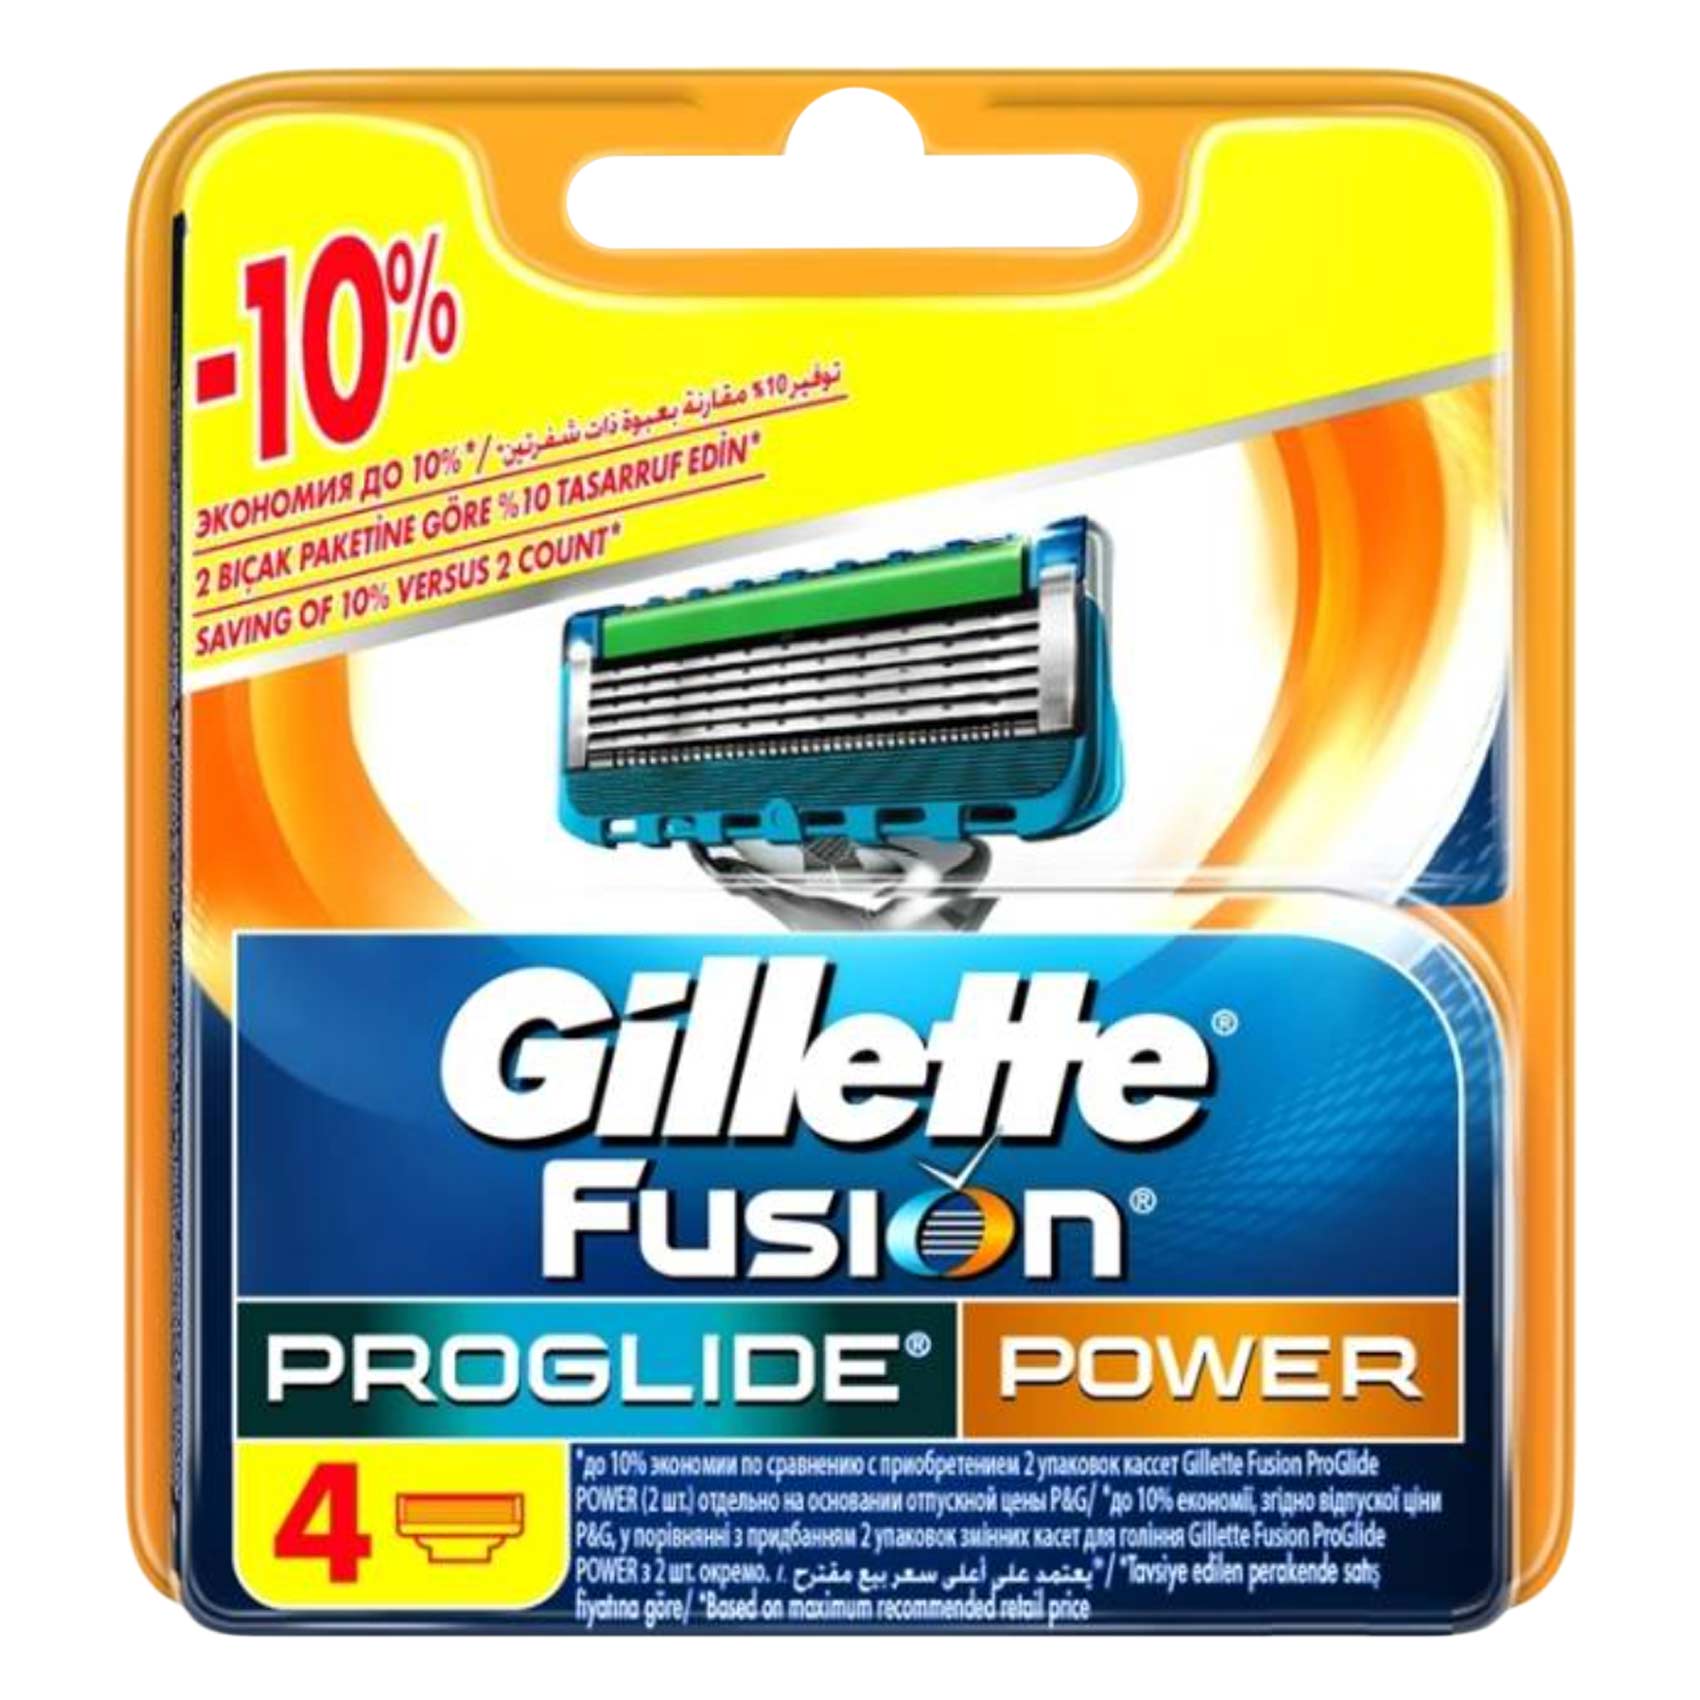 Gillette Fusion ProGlide Power Razor Blades For Men 4 Pieces